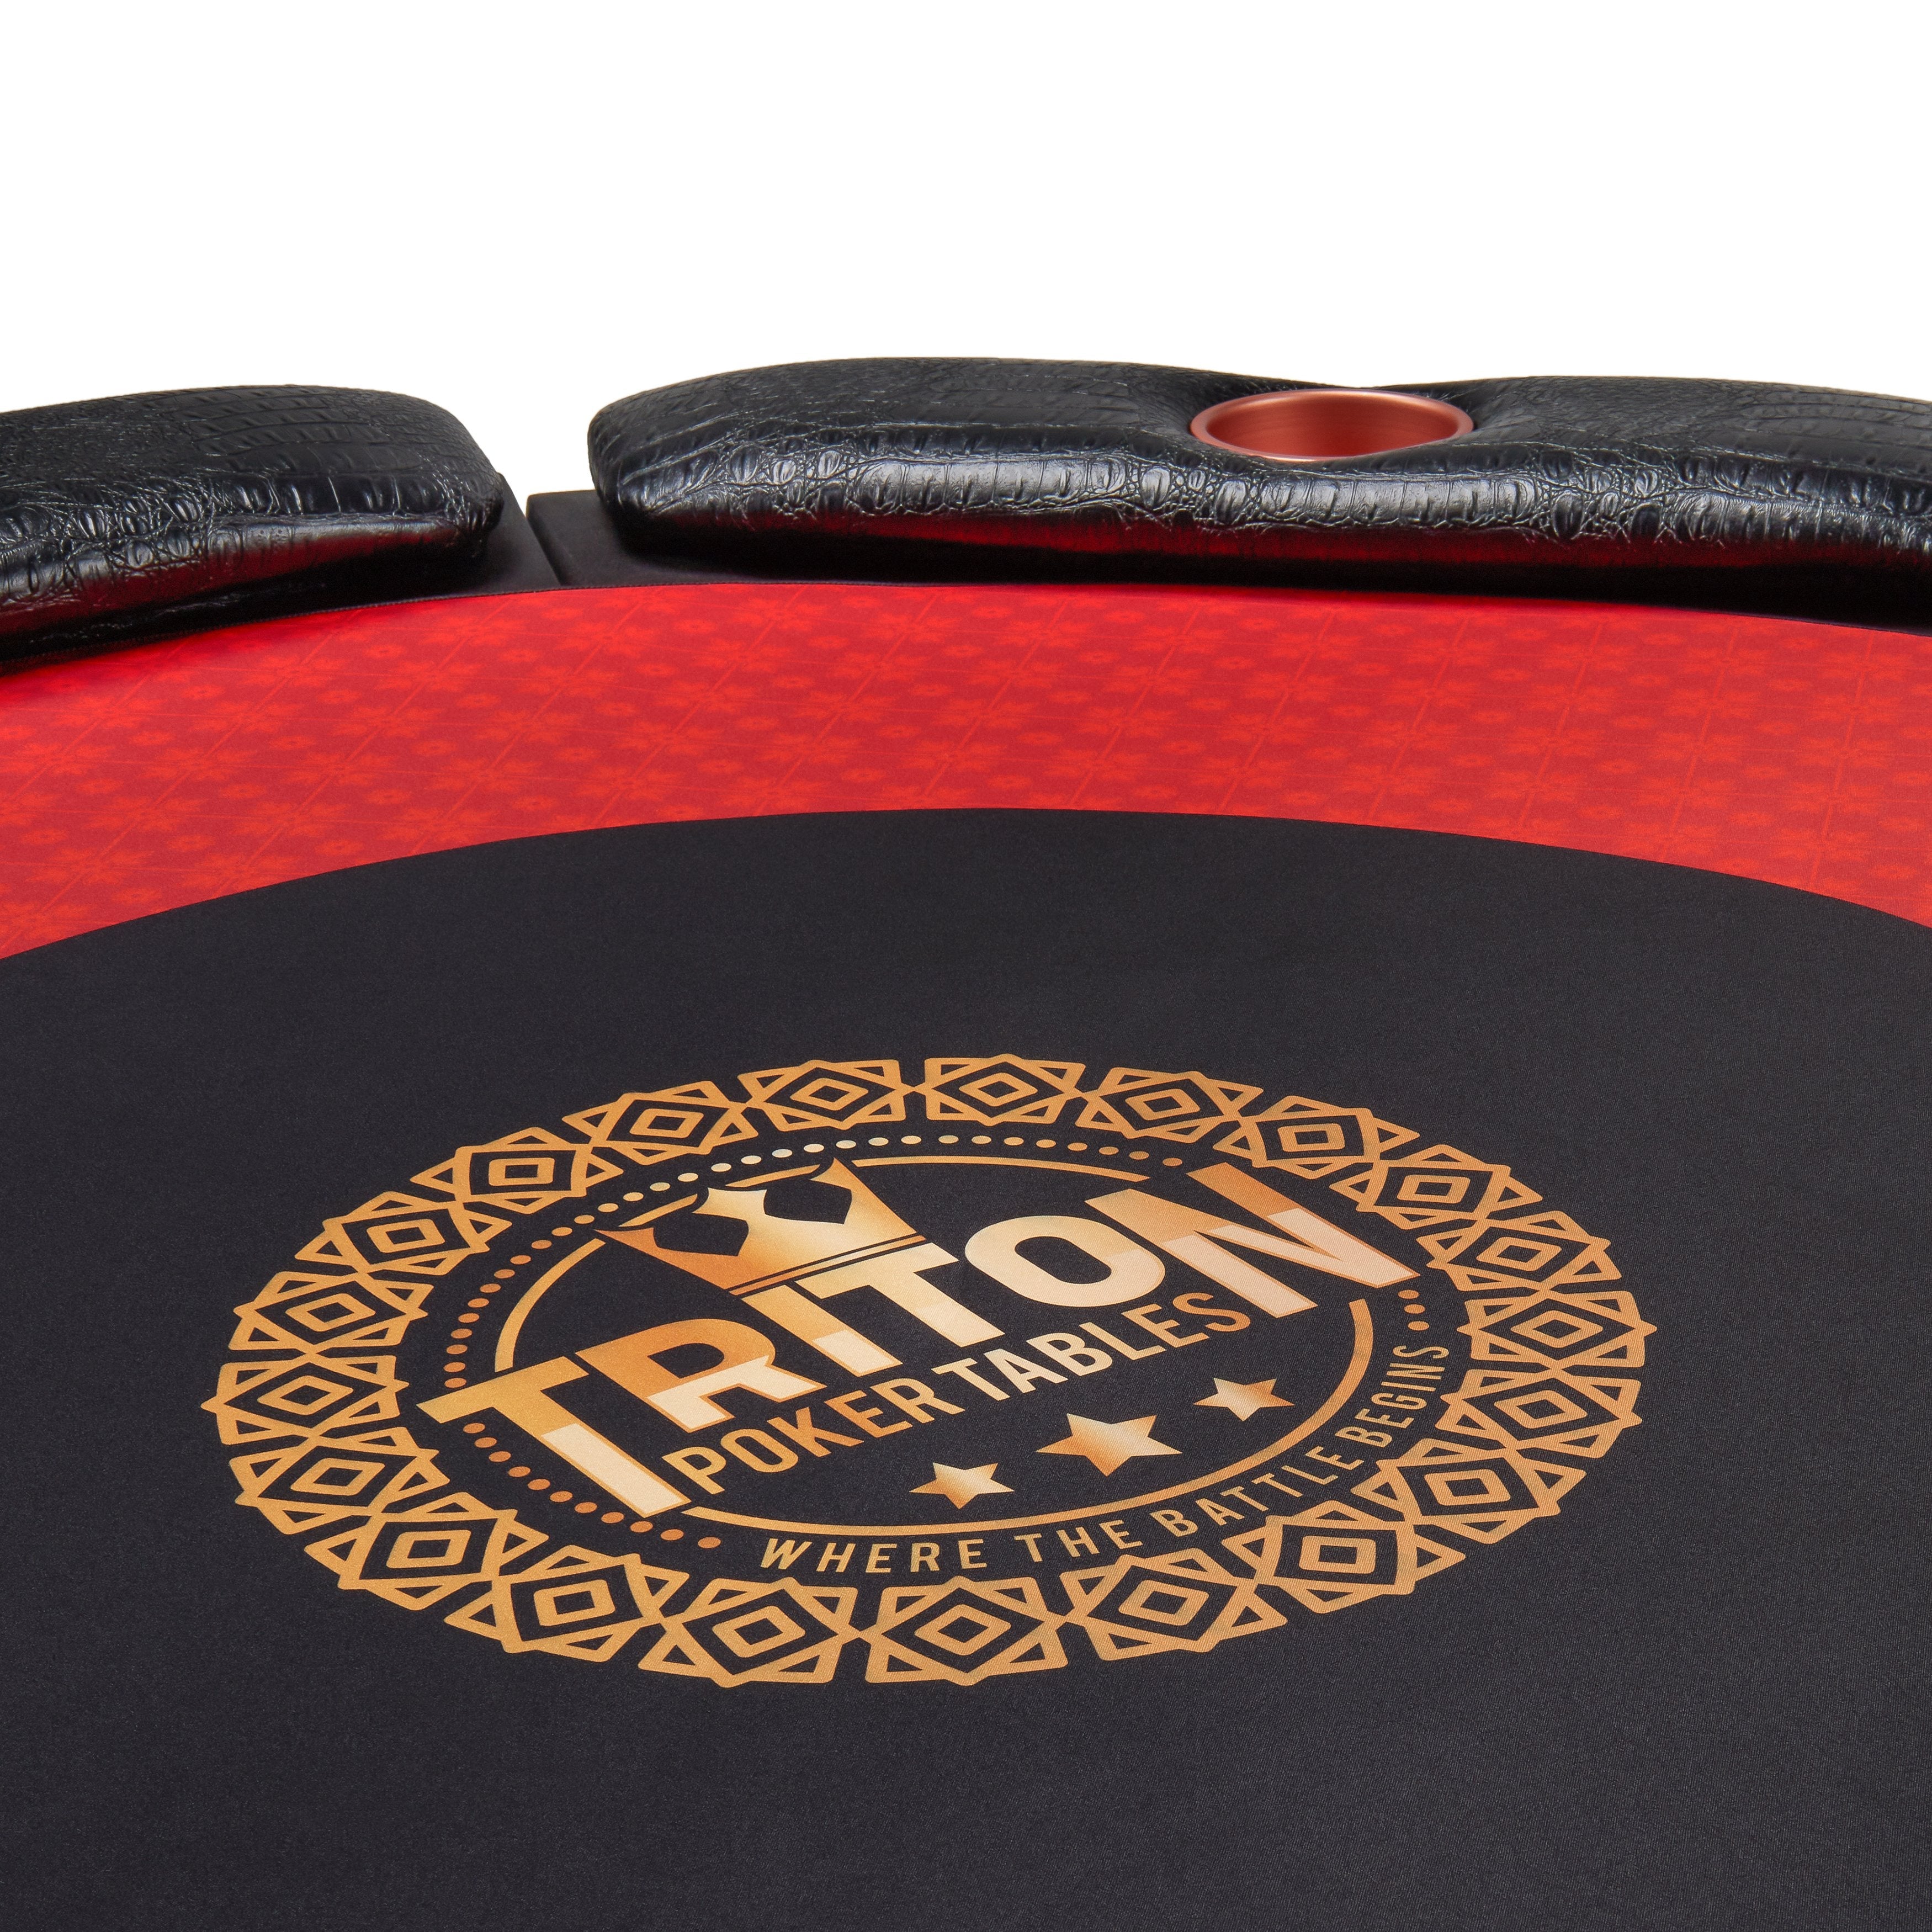 Triton Classic Folding 8 Player Poker Table